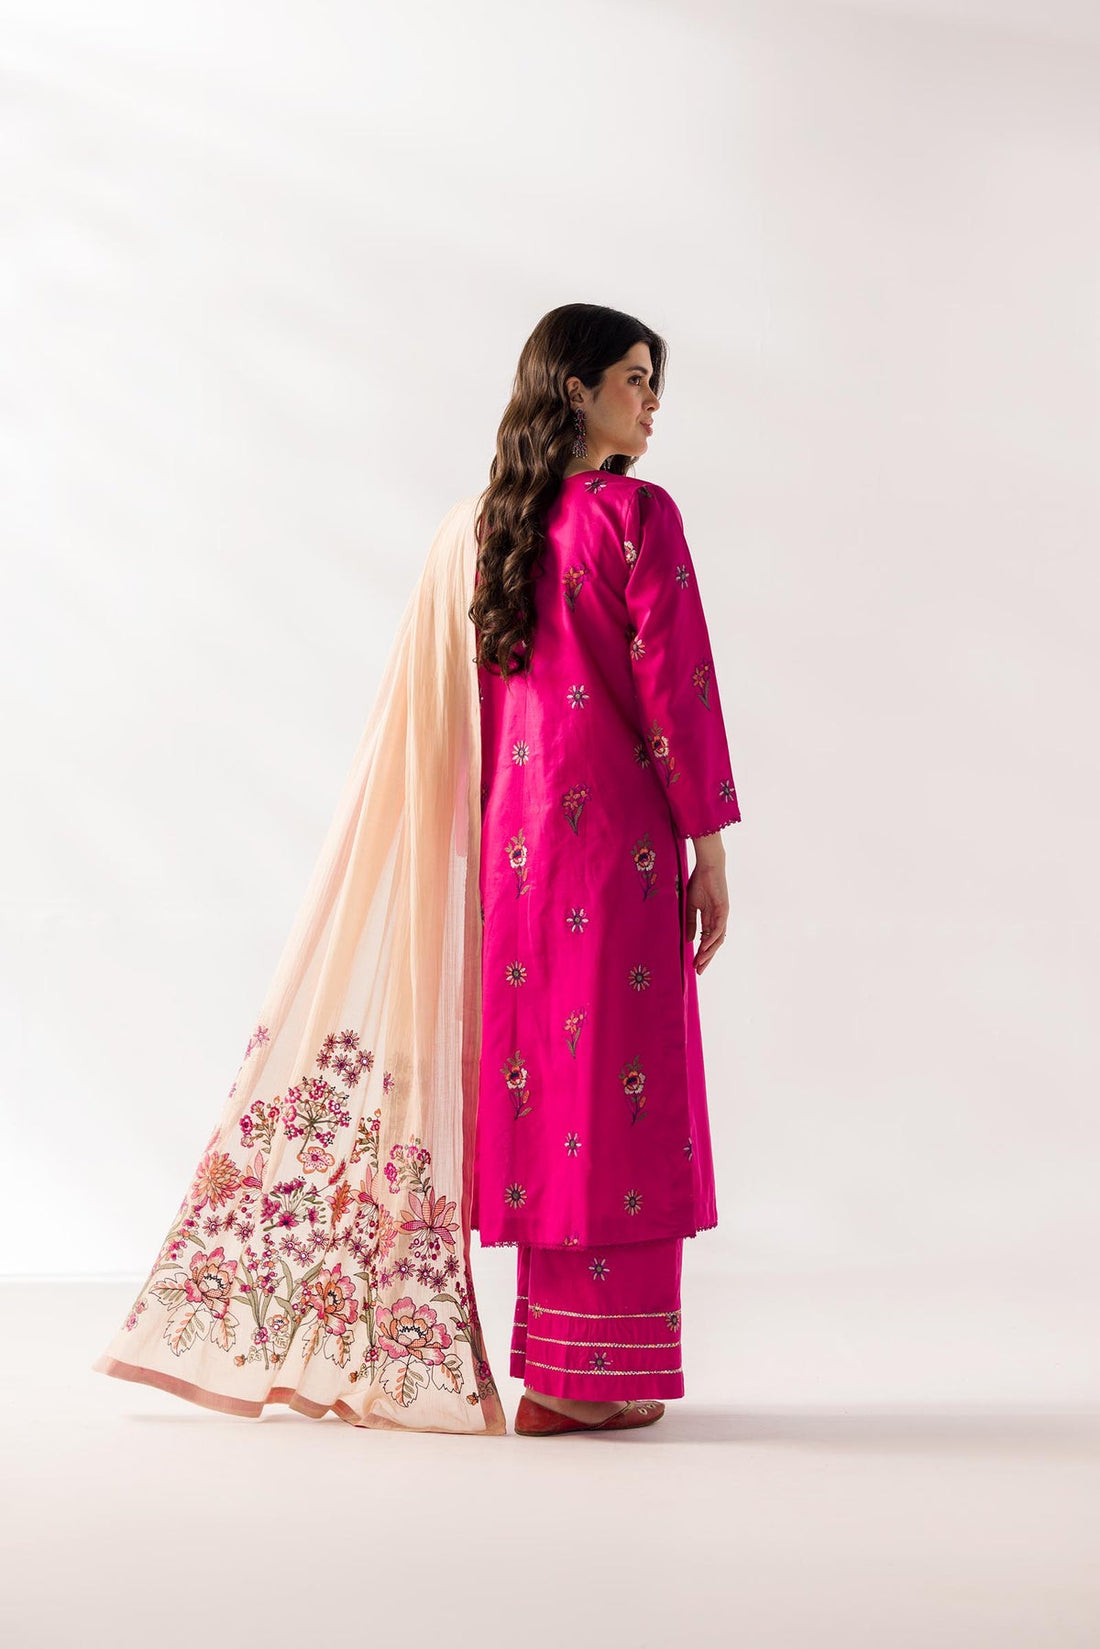 Taanabaana | Mem Saab Collection | M3252 - Khanumjan  Pakistani Clothes and Designer Dresses in UK, USA 